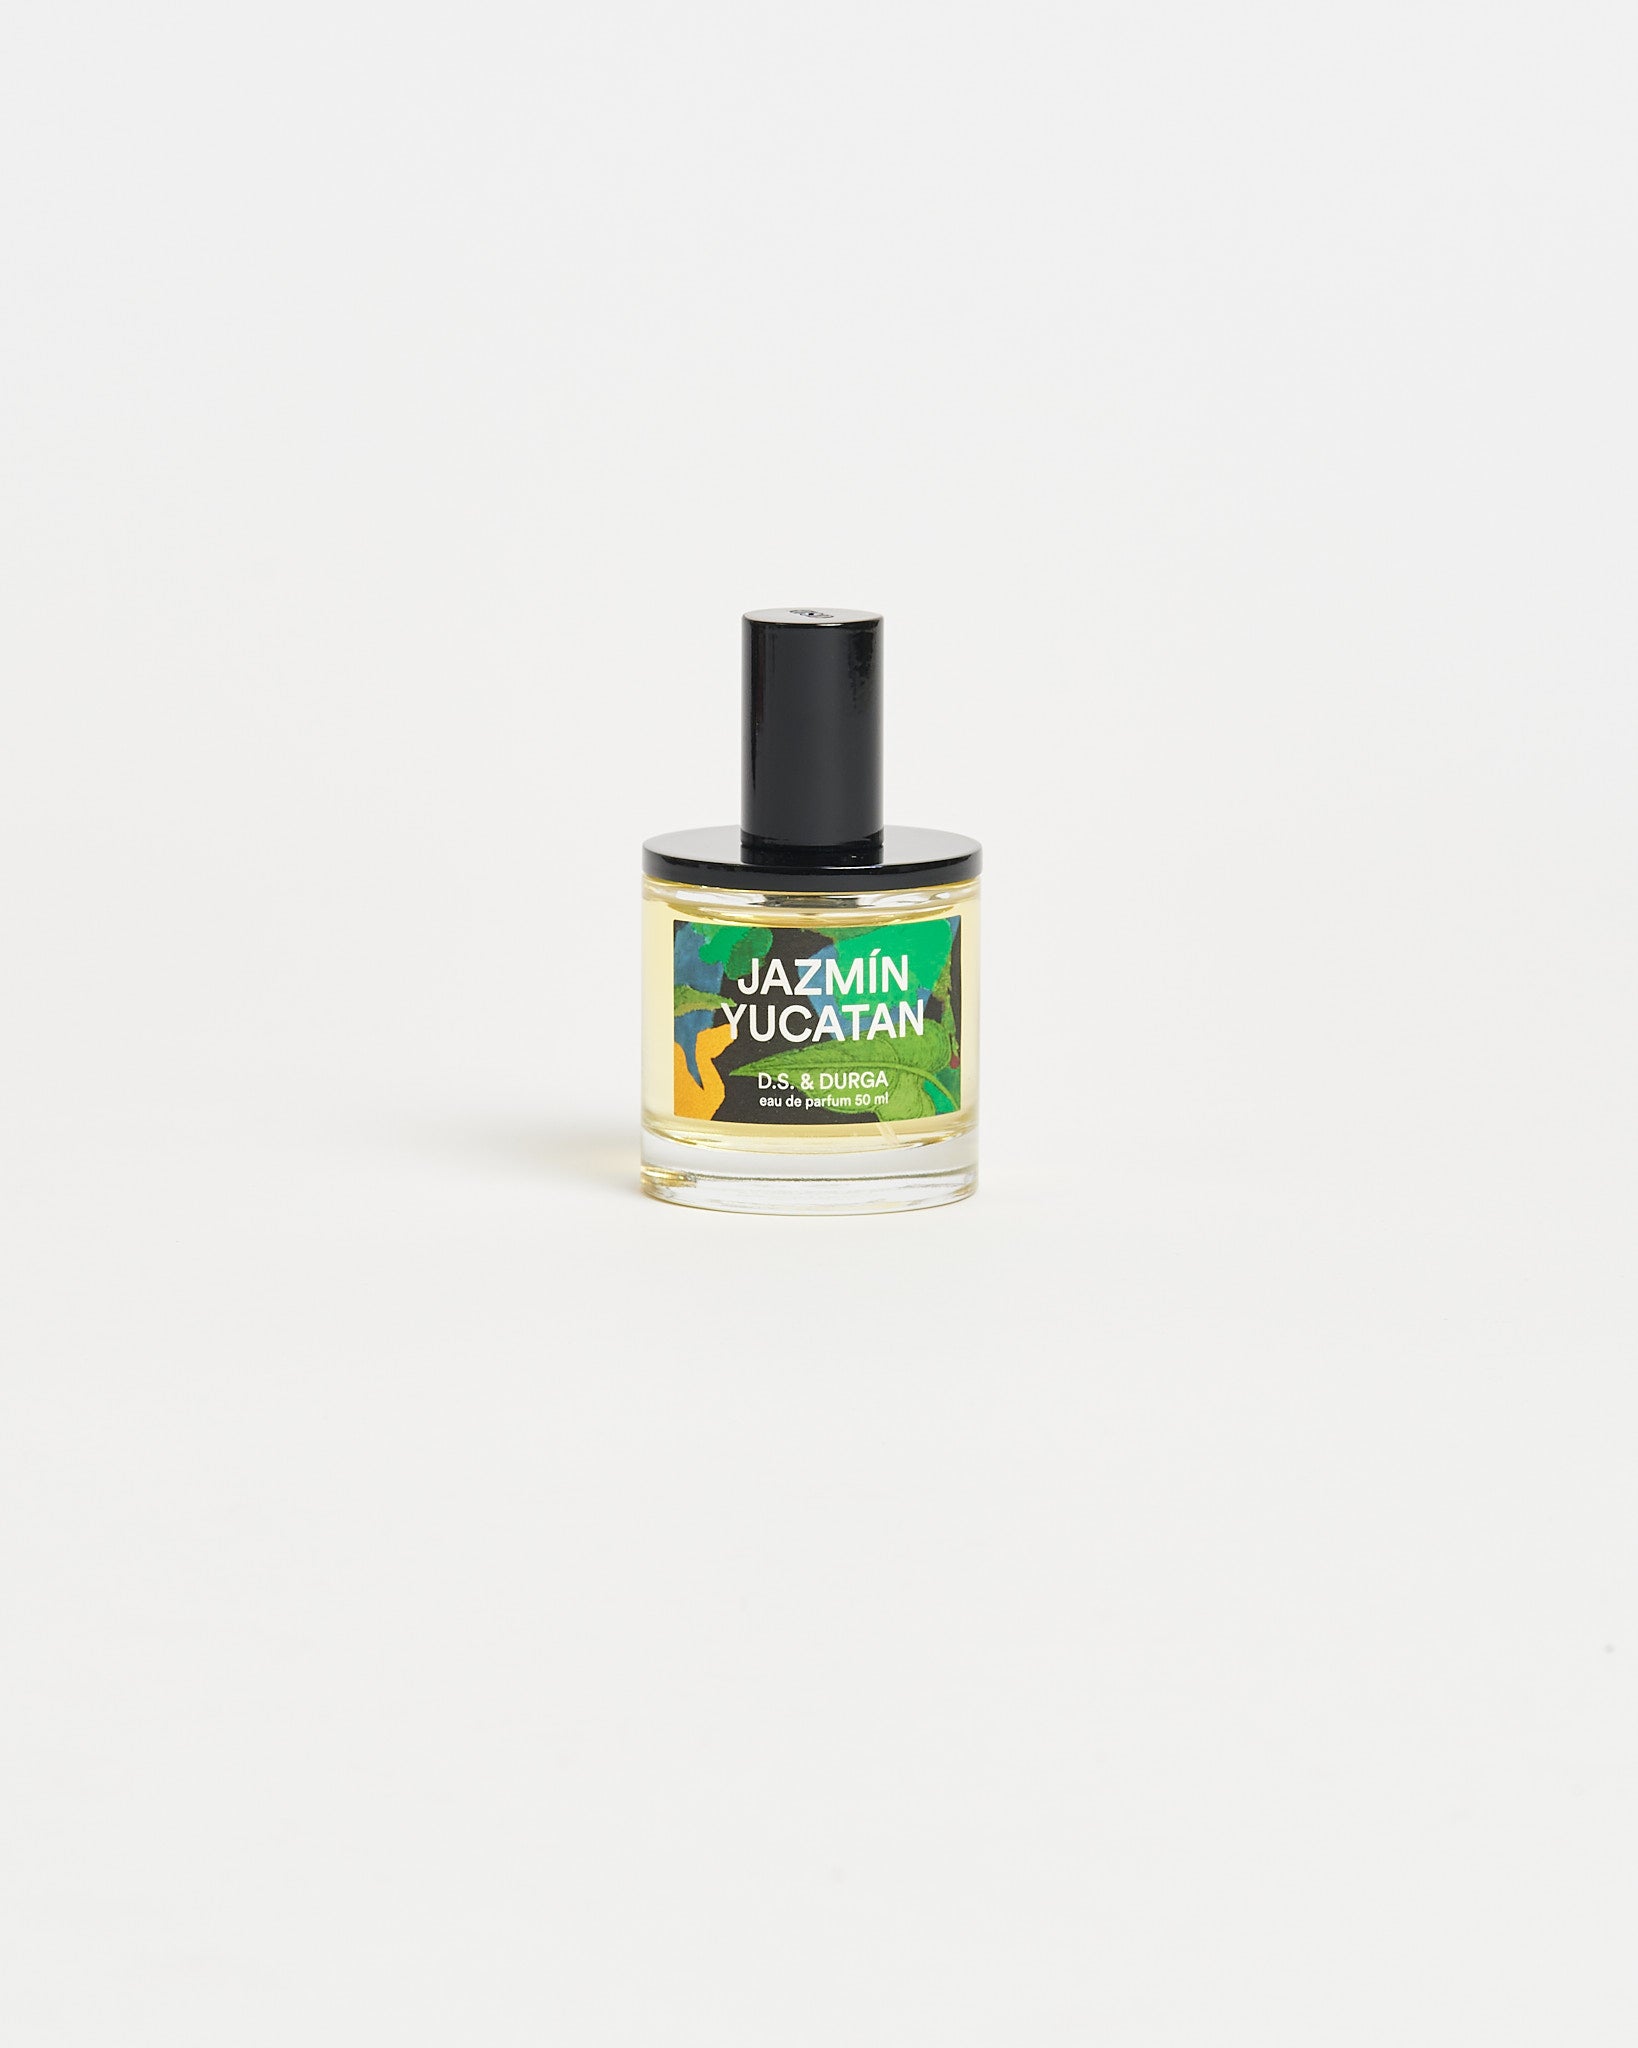 Eau de Parfum in Jazmin Yucatan